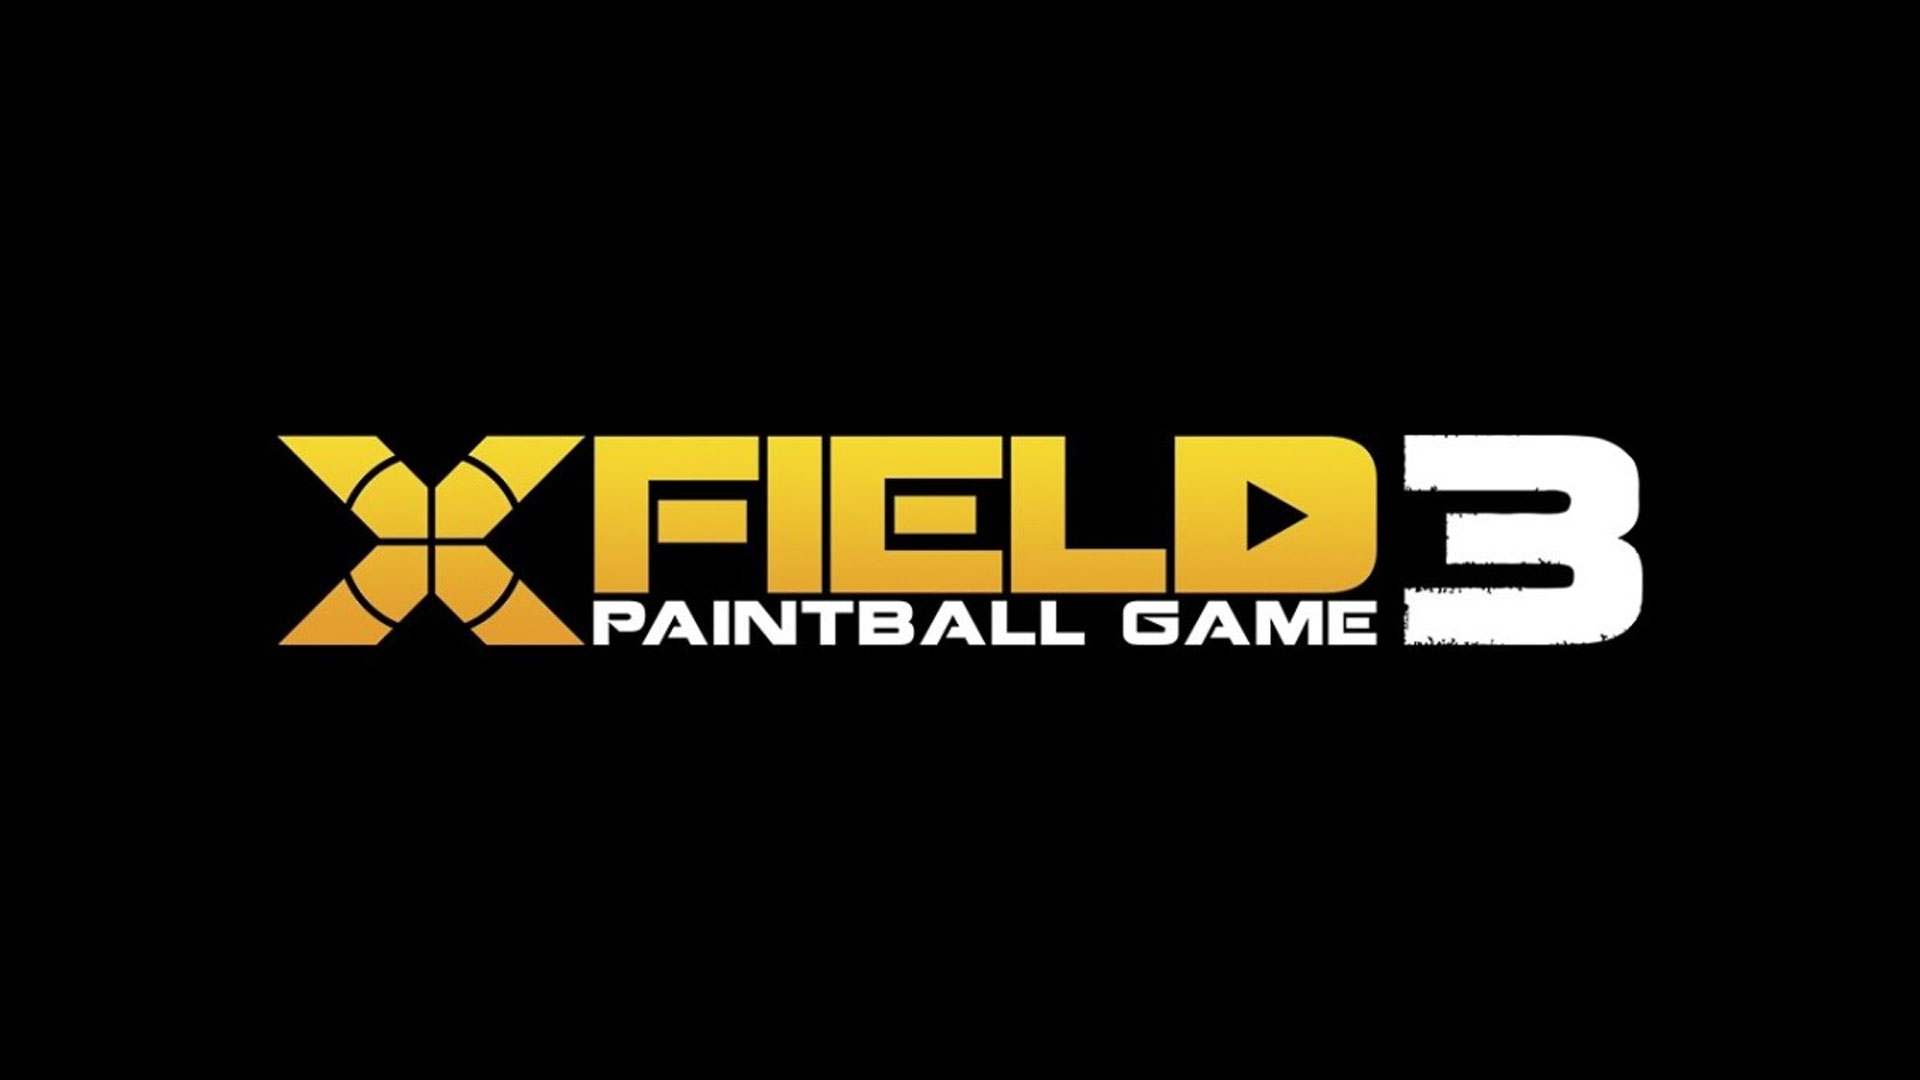 XField Paintball 3 Logo